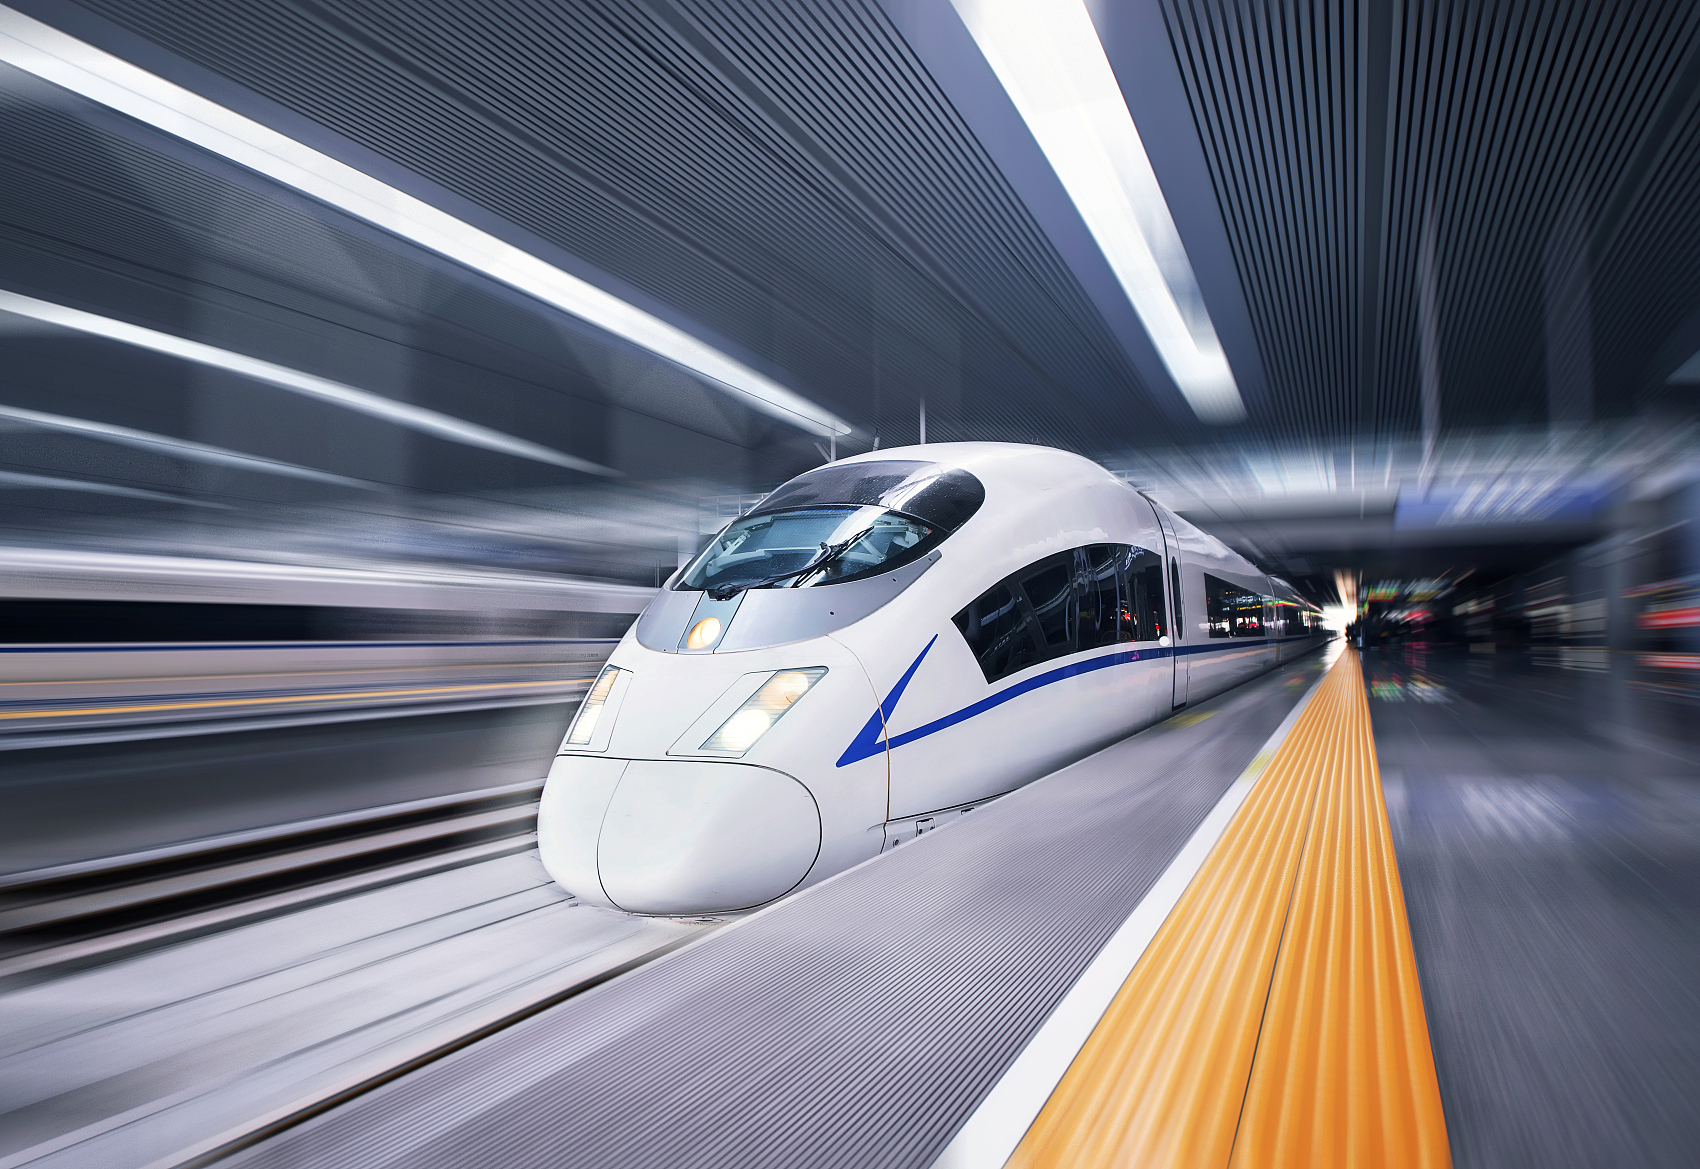 Qingdao Rail Transit is moving towards a 500 billion yuan industrial cluster